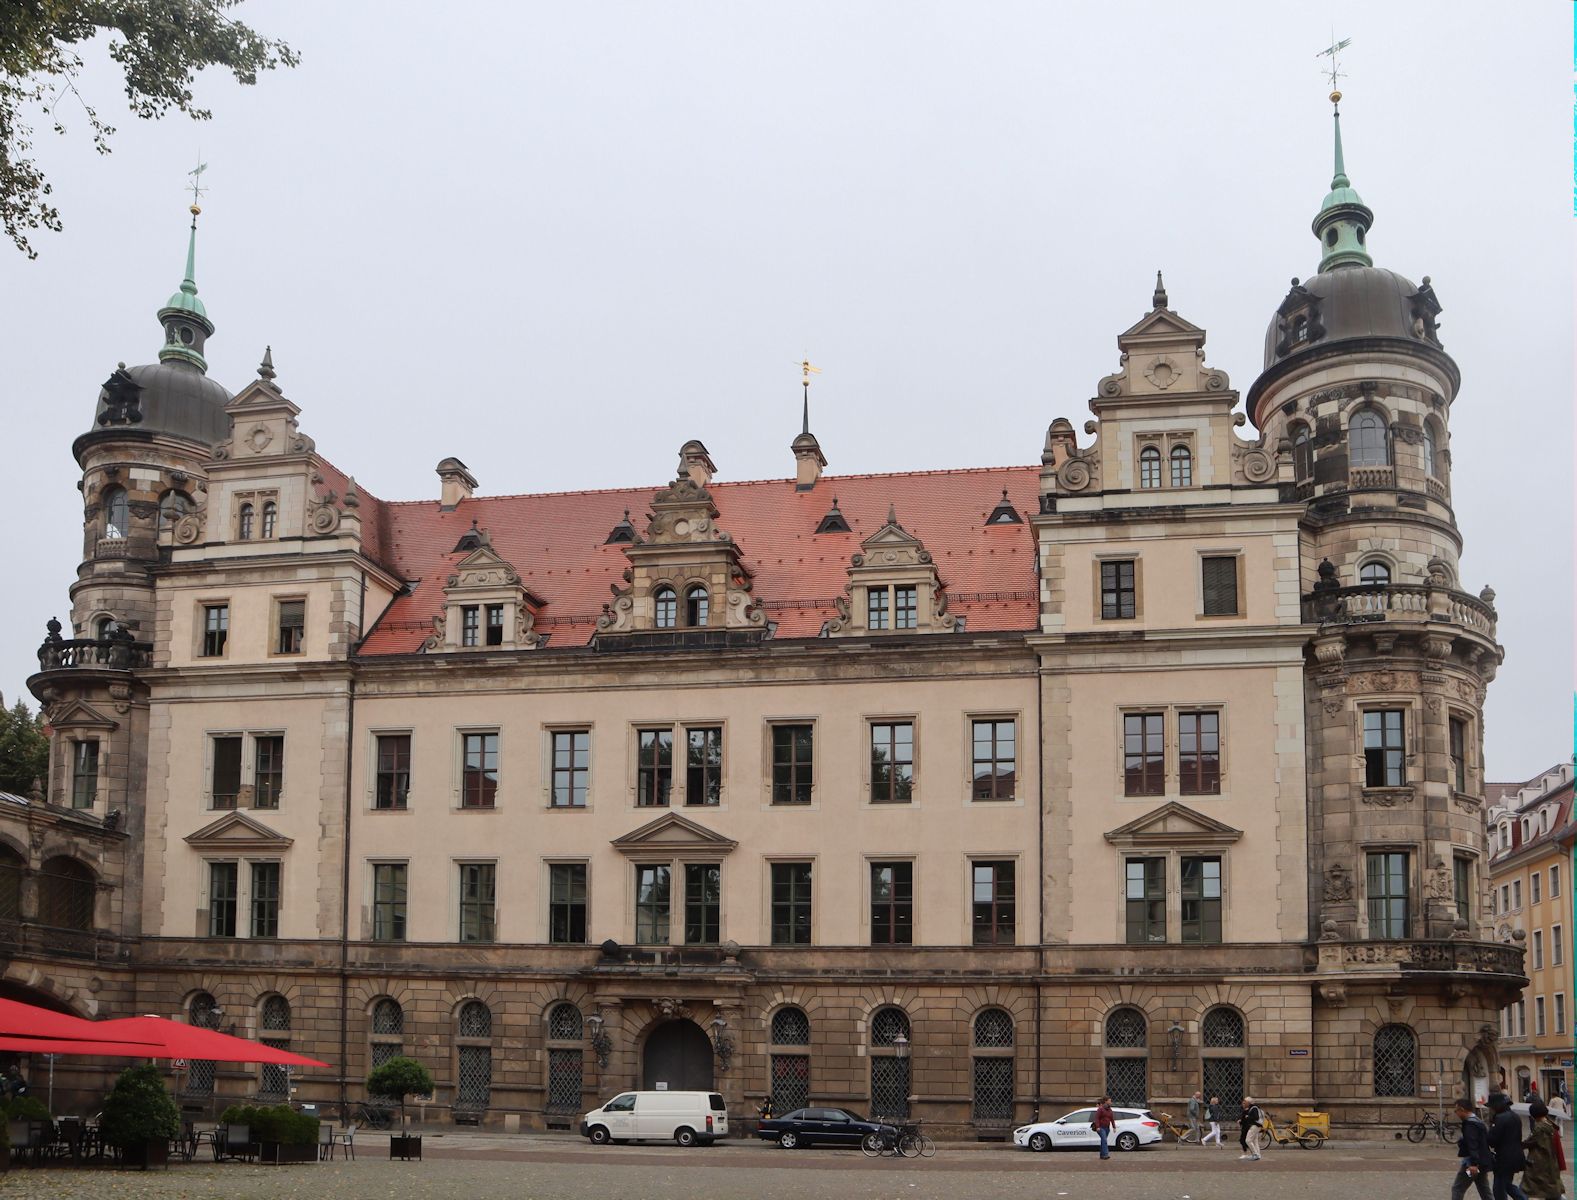 Südfront des Schlosses in Dresden